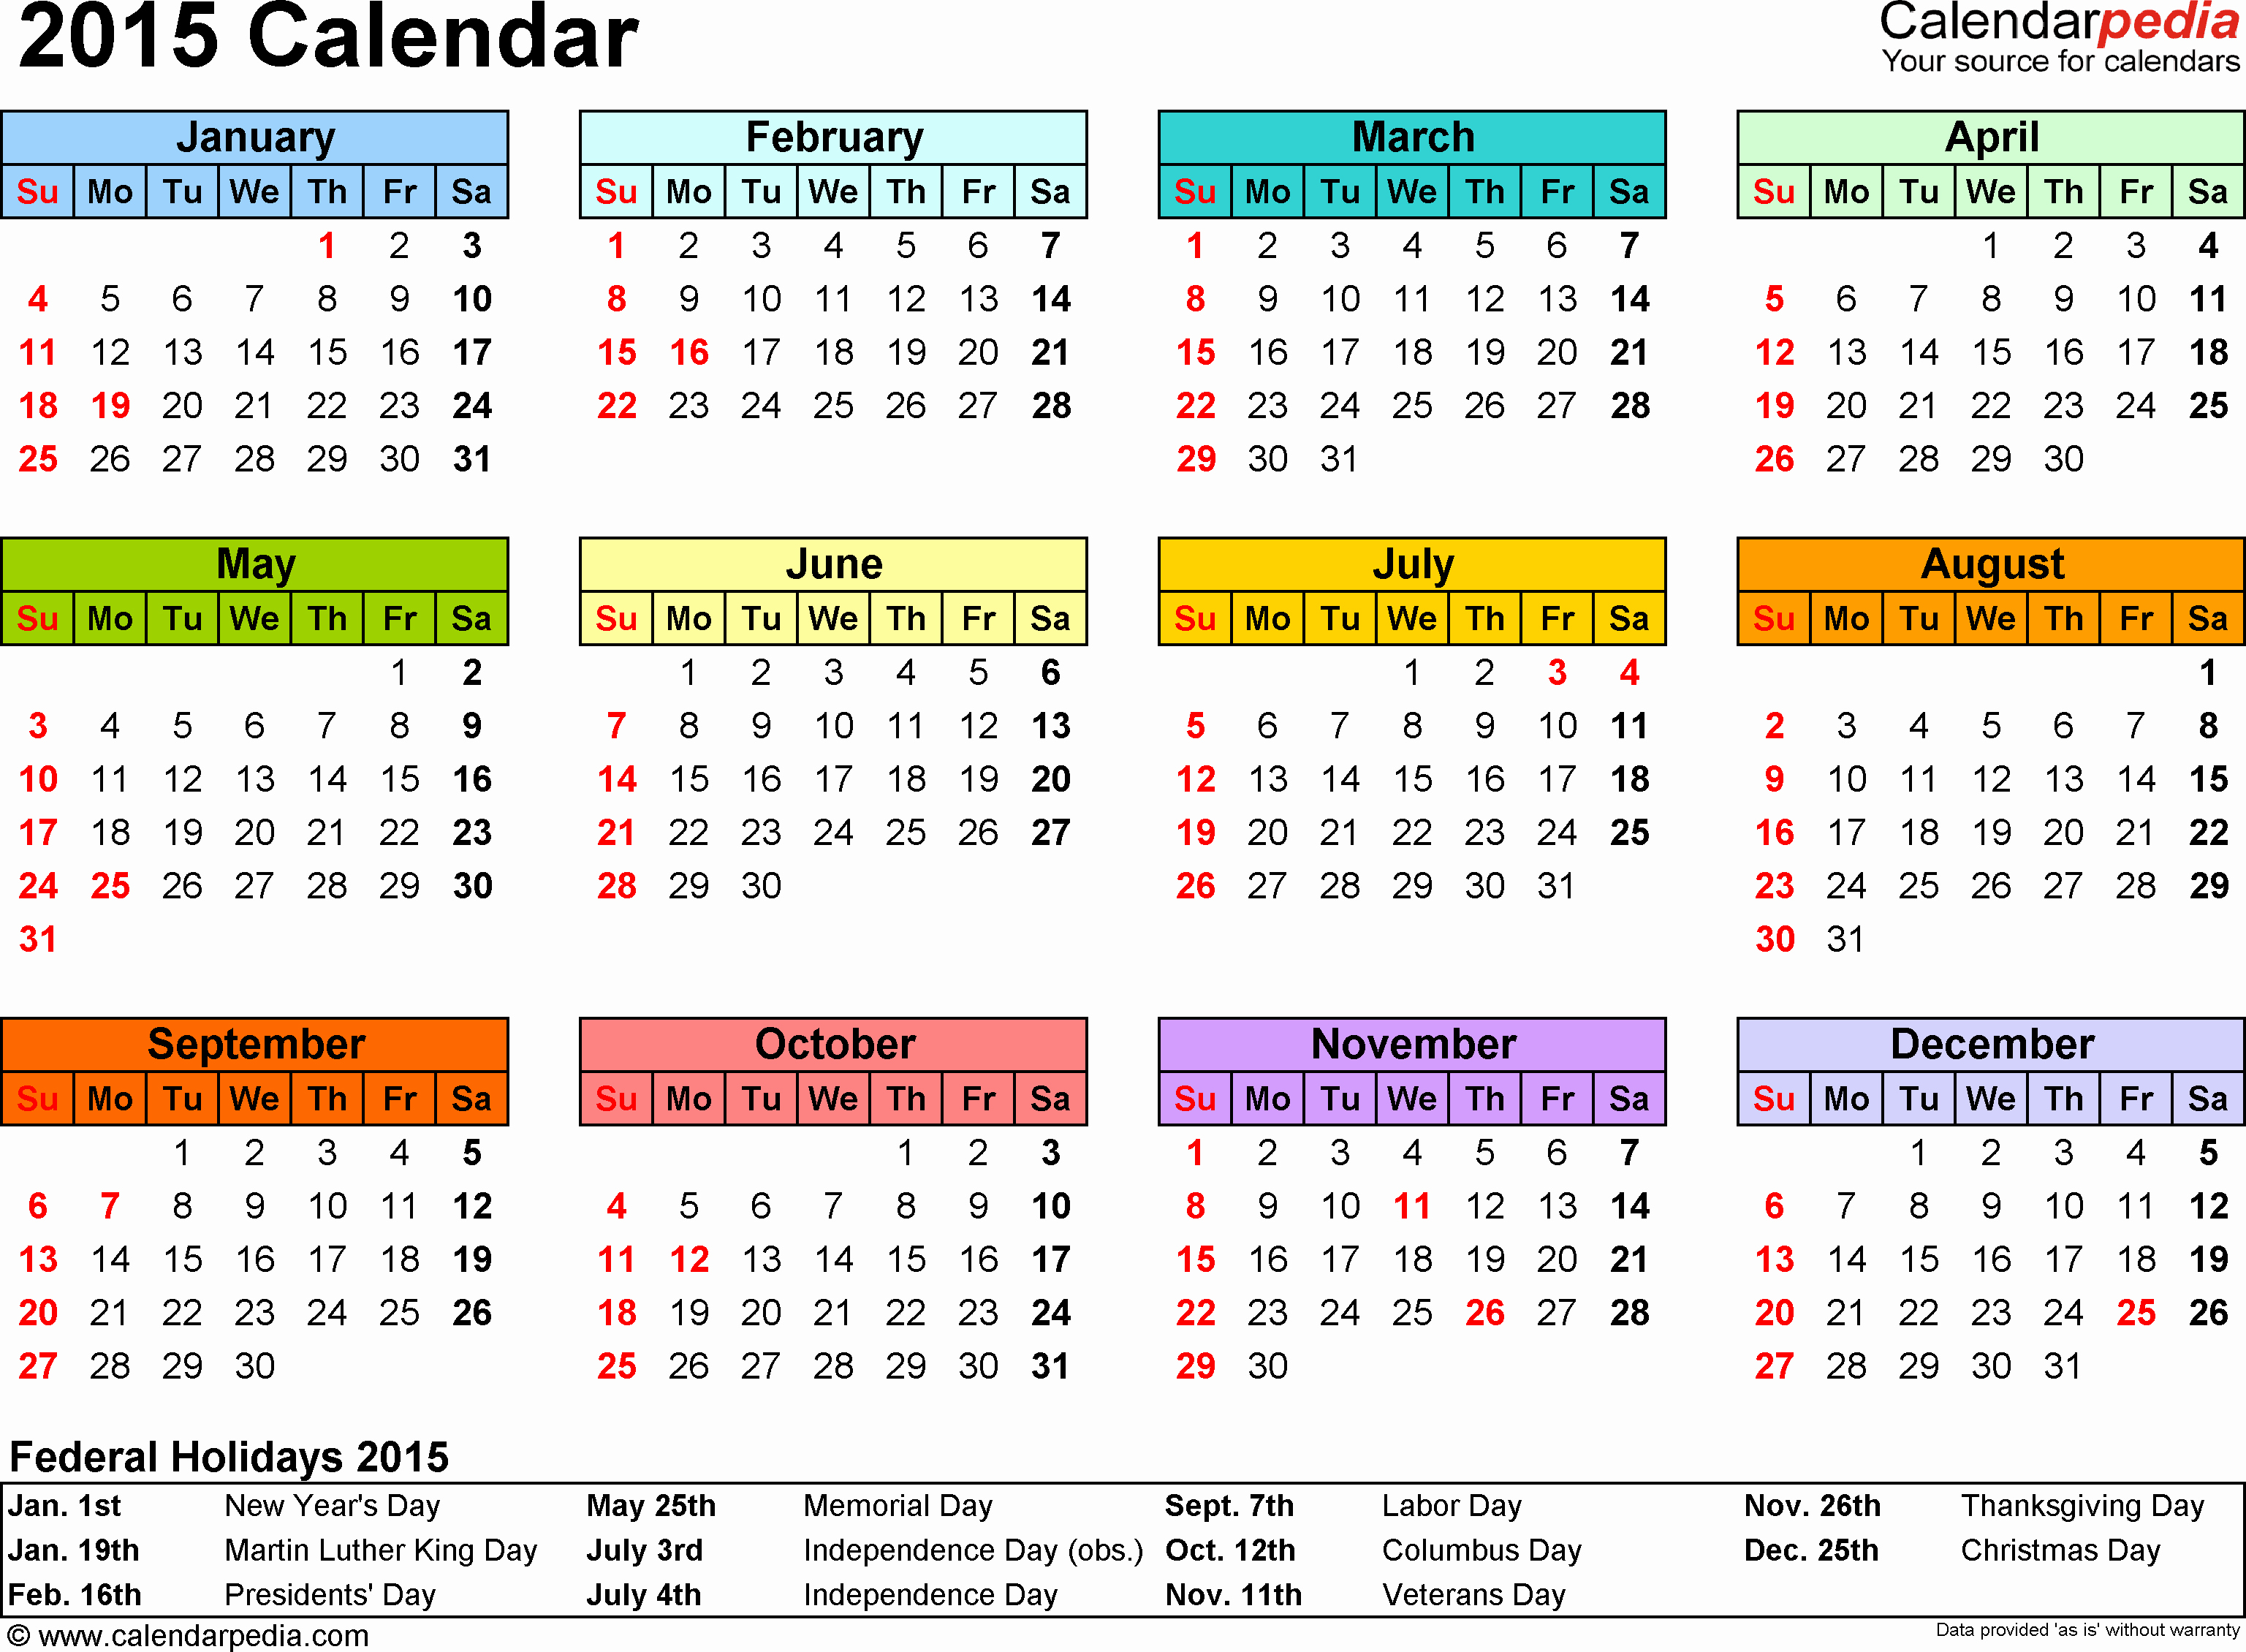 Free Yearly Calendar Templates 2015 New 2015 Calendar Pdf 16 Free Printable Calendar Templates